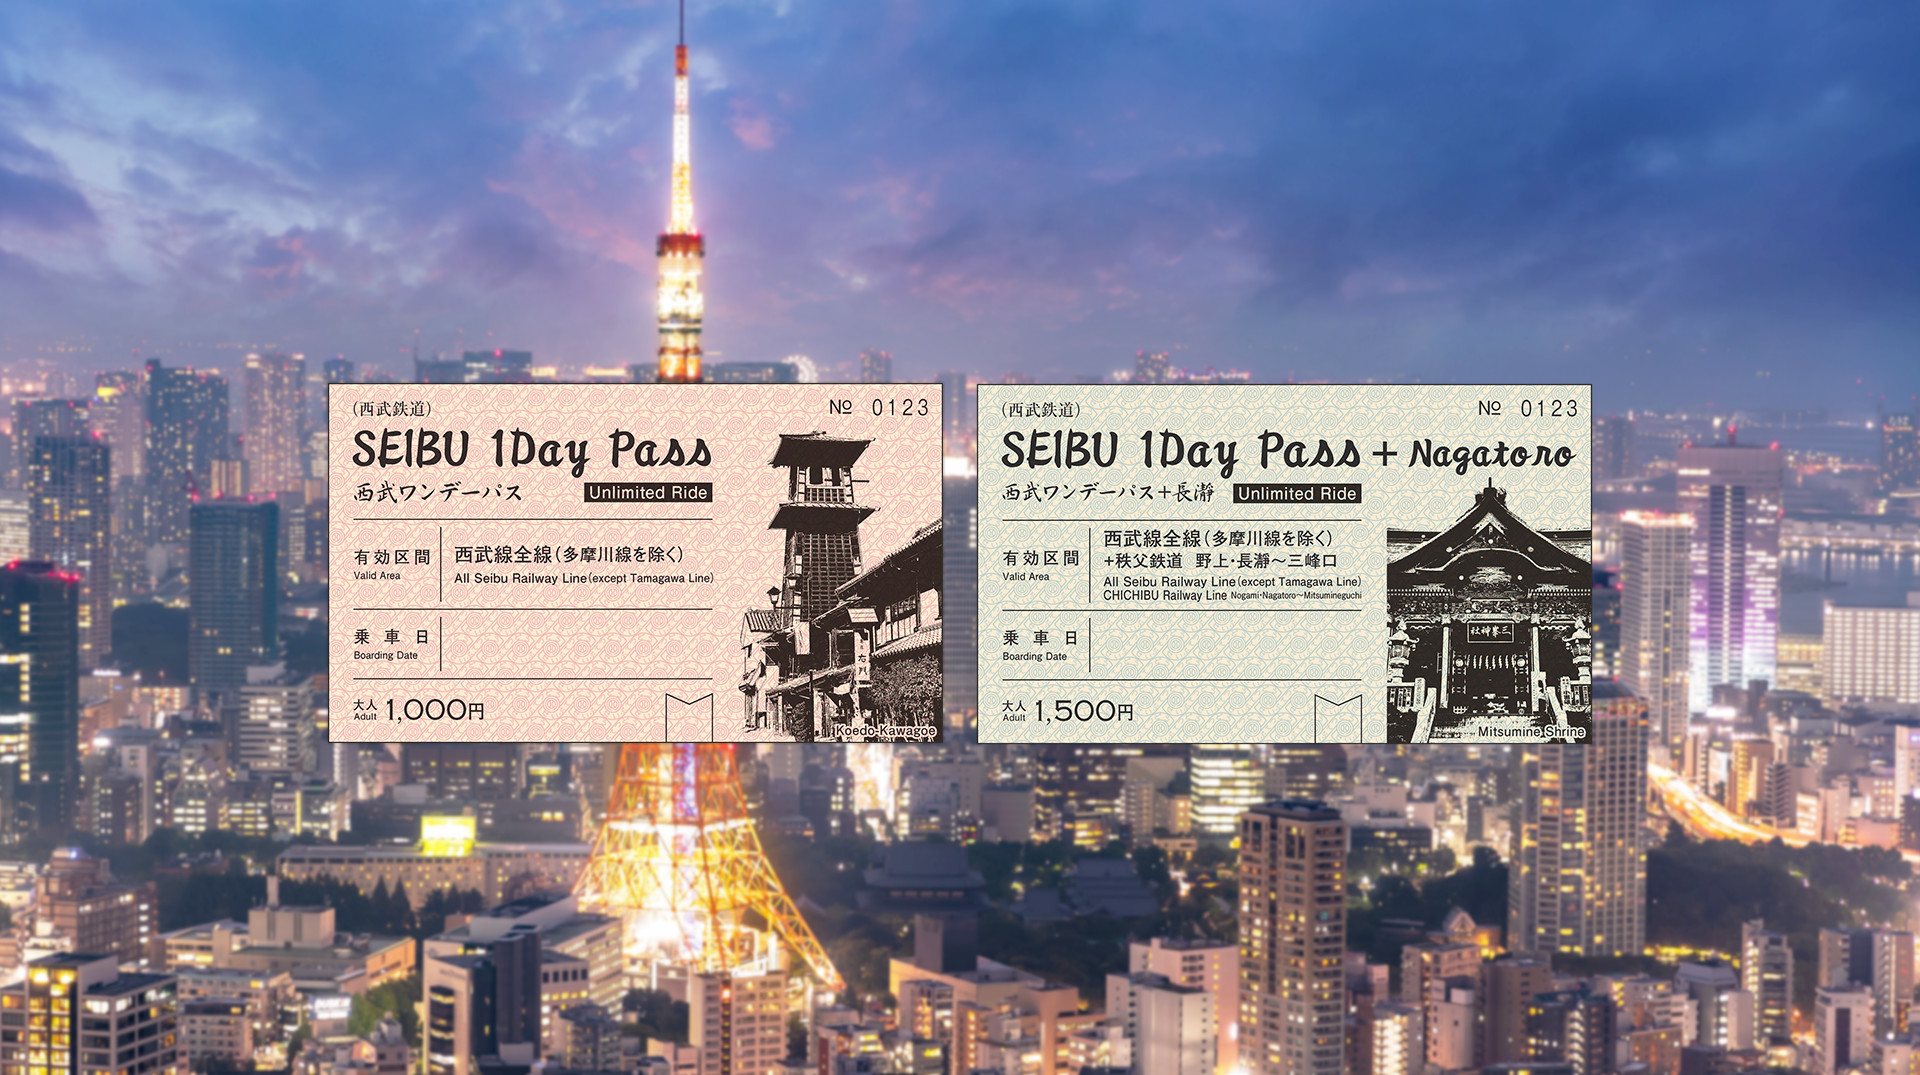 Sale Seibu 1 Day Pass 西武铁路一日优惠通票 多种套票可选 Sale 3 Ticket Kd